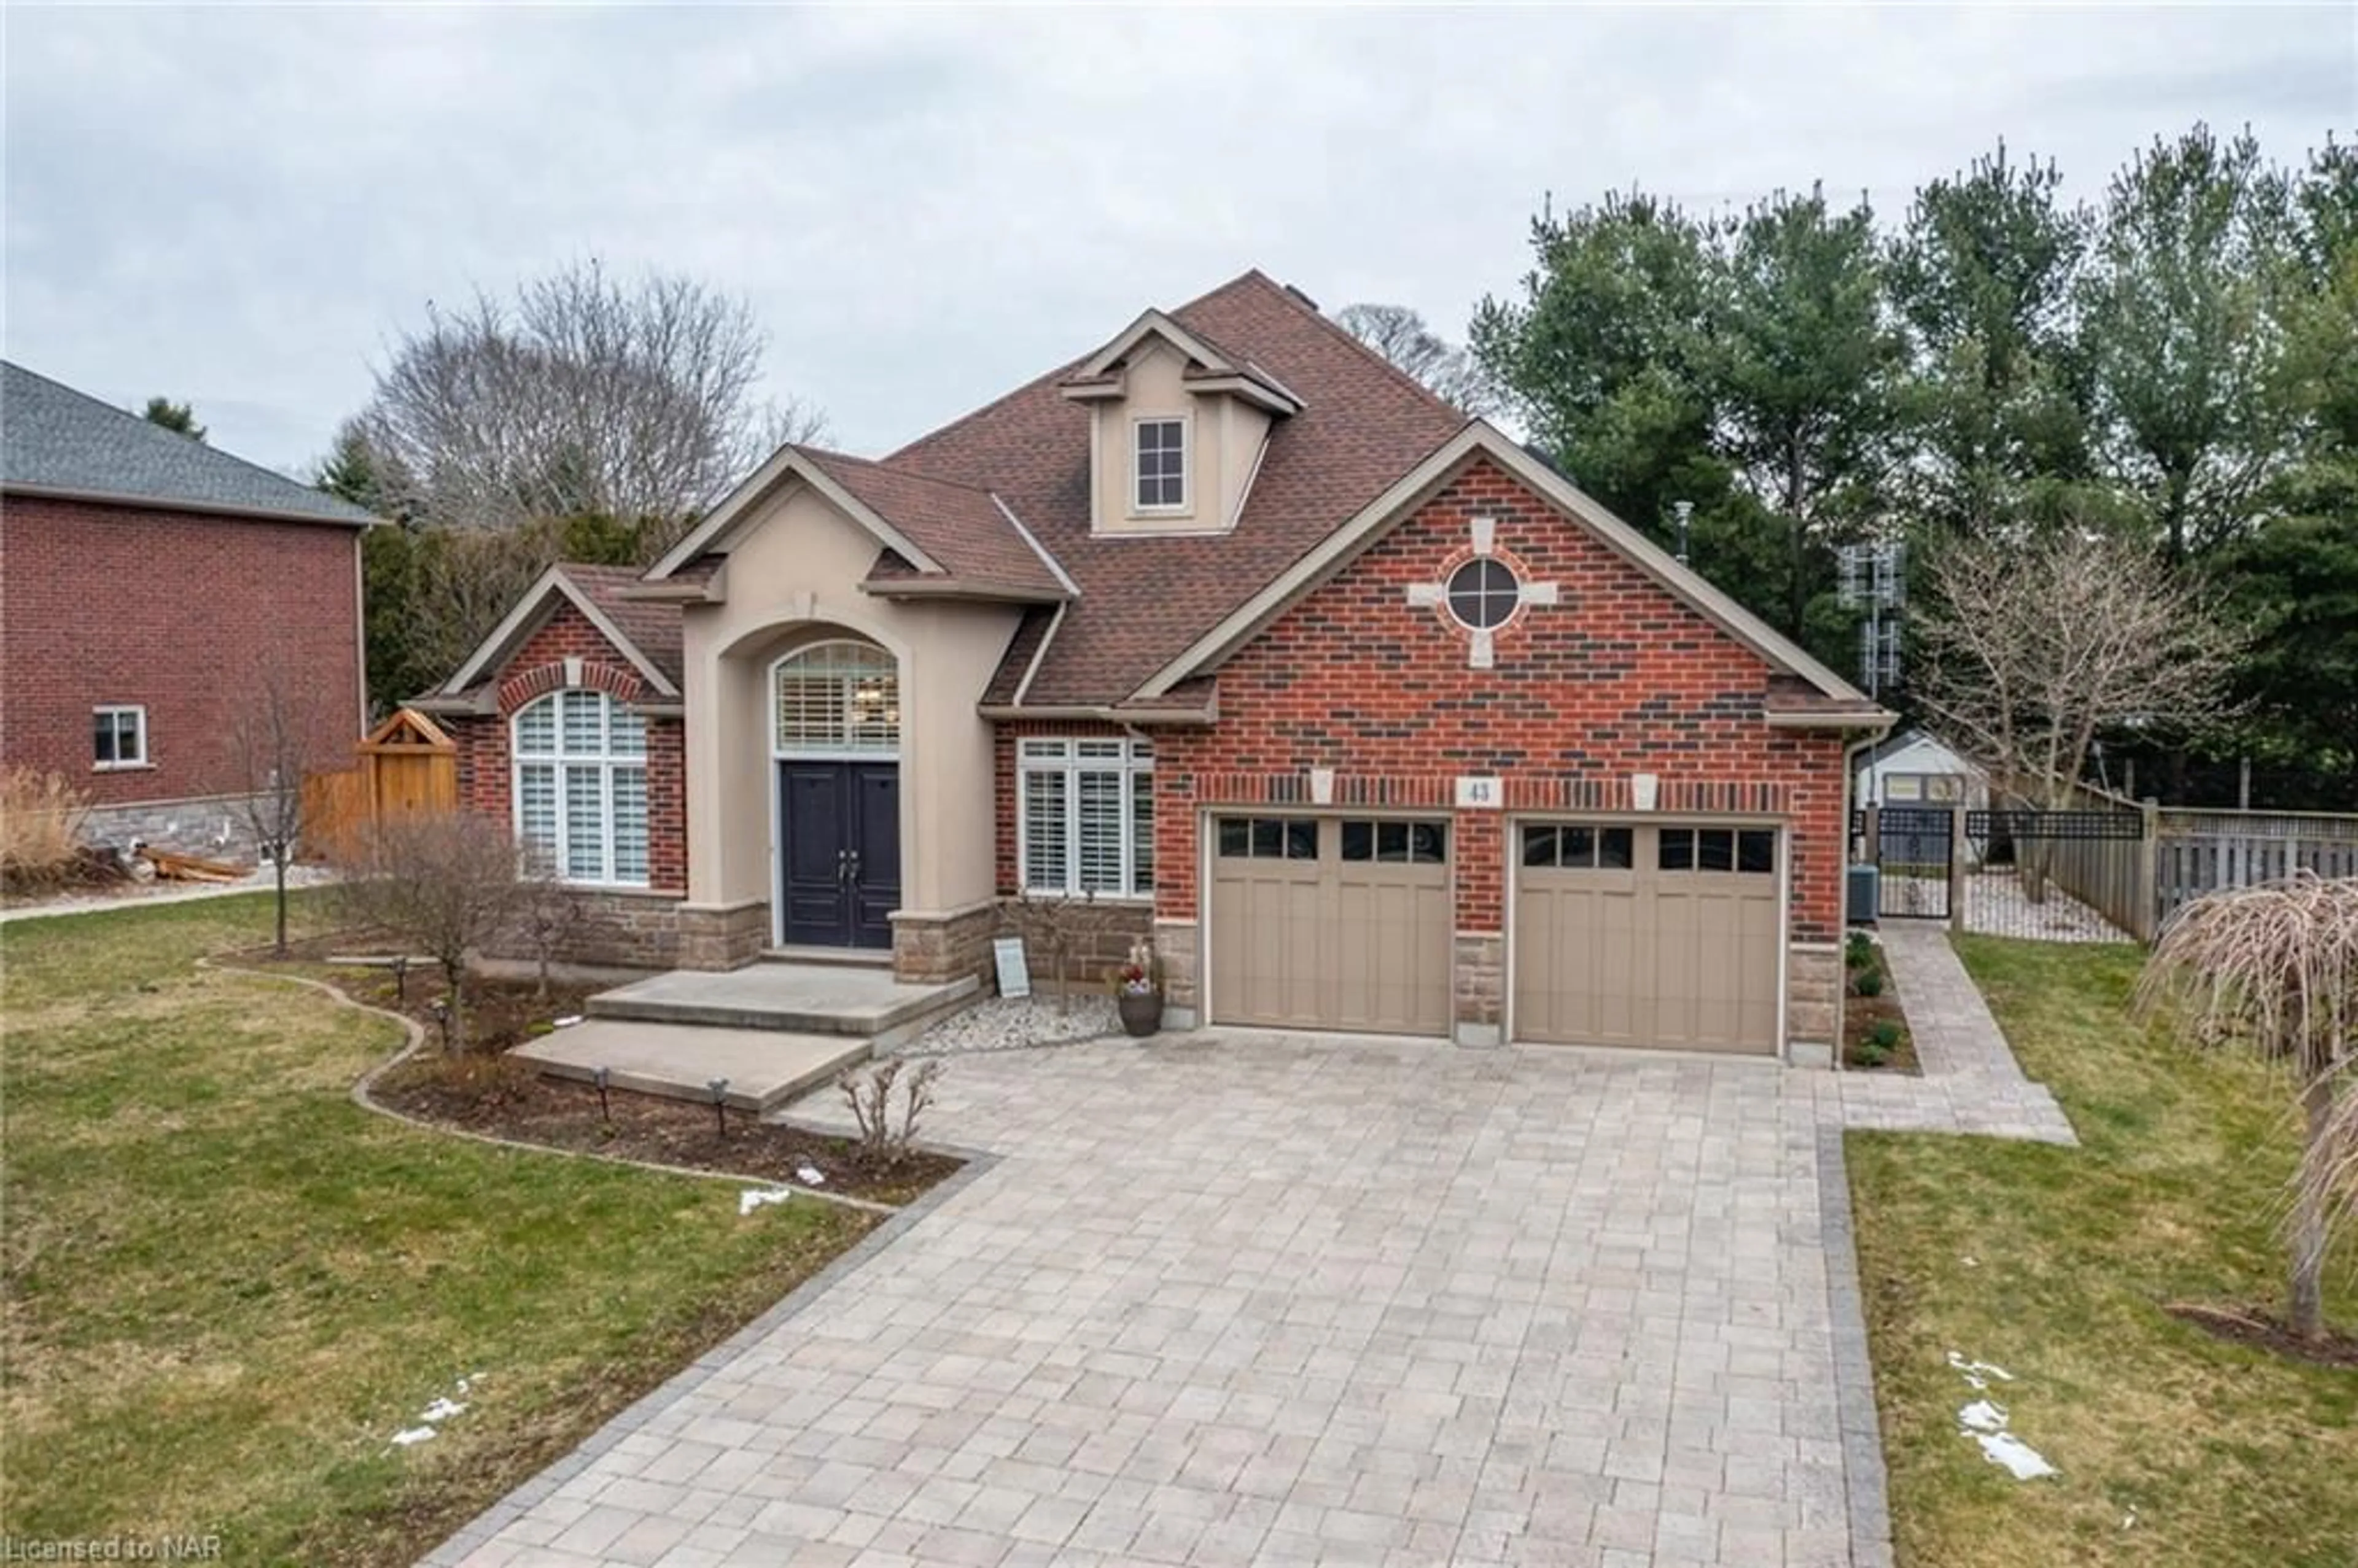 Home with brick exterior material for 43 Cherry Ridge Boulevard Blvd, Fenwick Ontario L0S 1C0